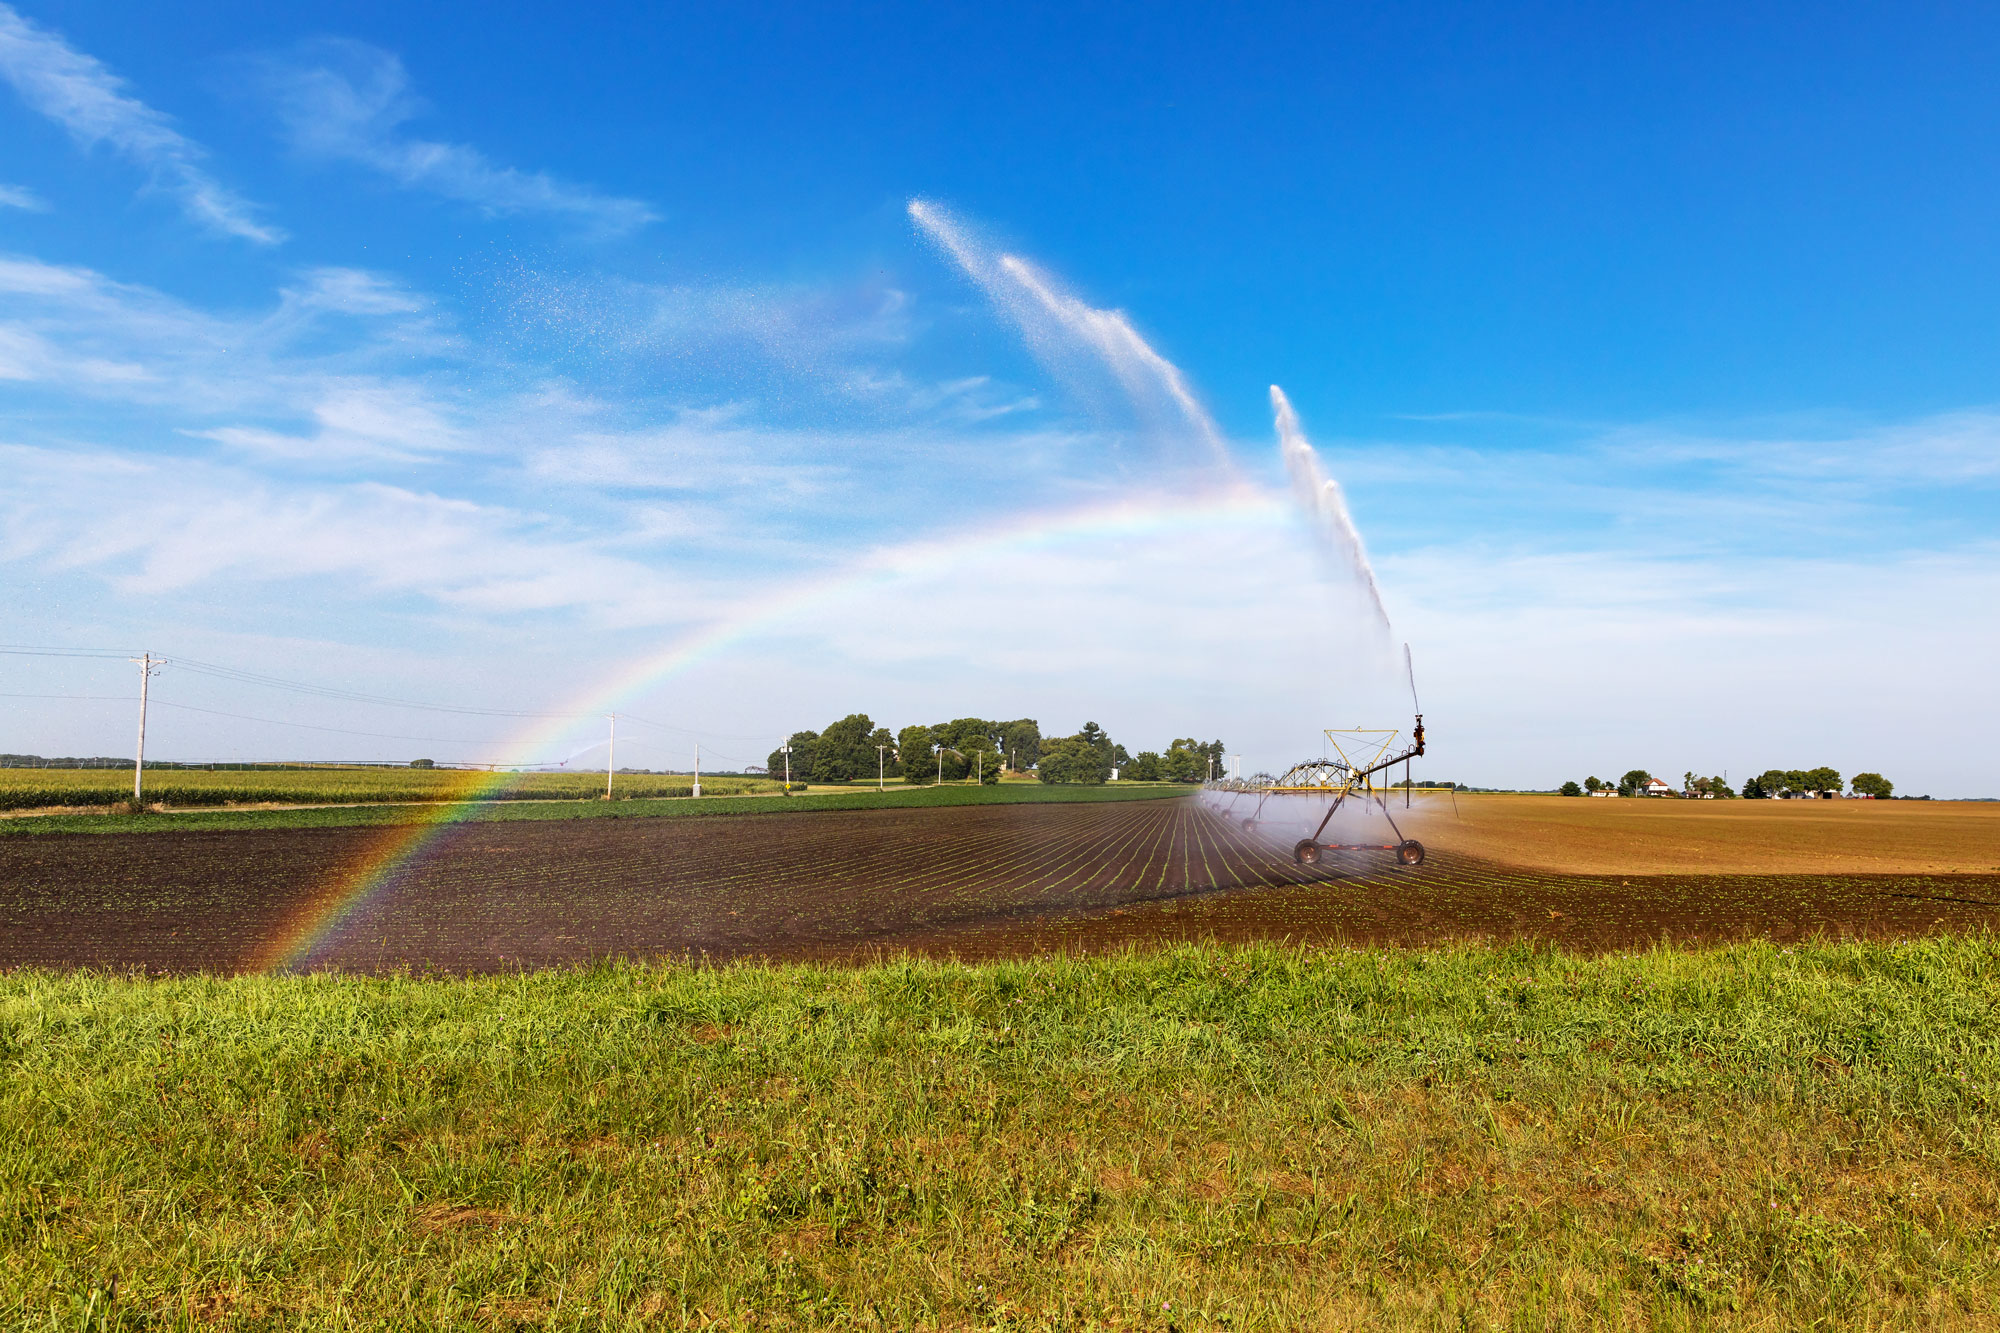 center pivot irrigation system spraying water on soybean field creating rainbow